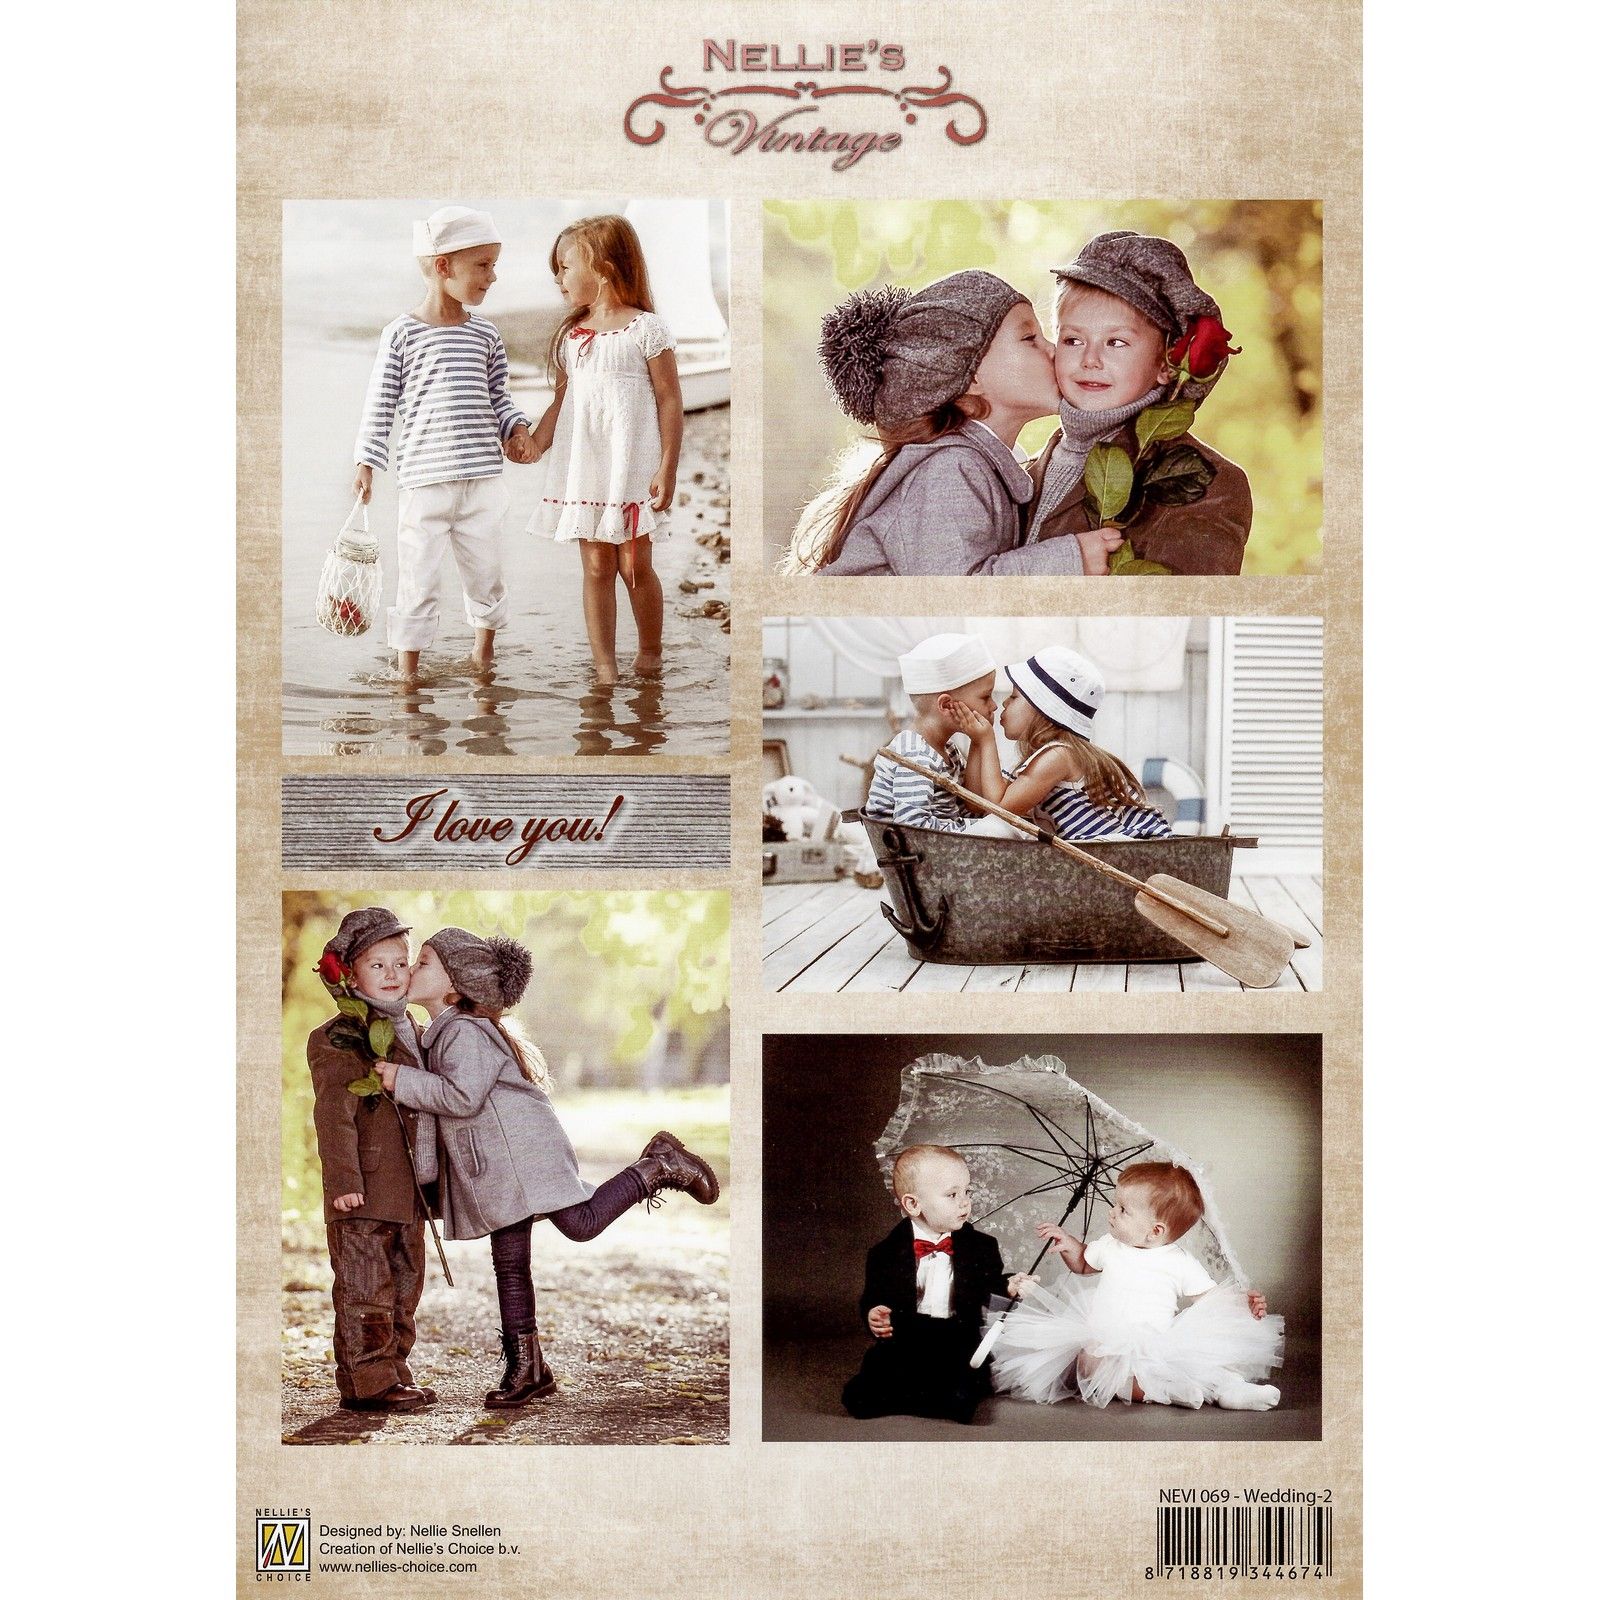 Nellie's Choice • Vintage Decoupage Foglio Wedding-2 A4